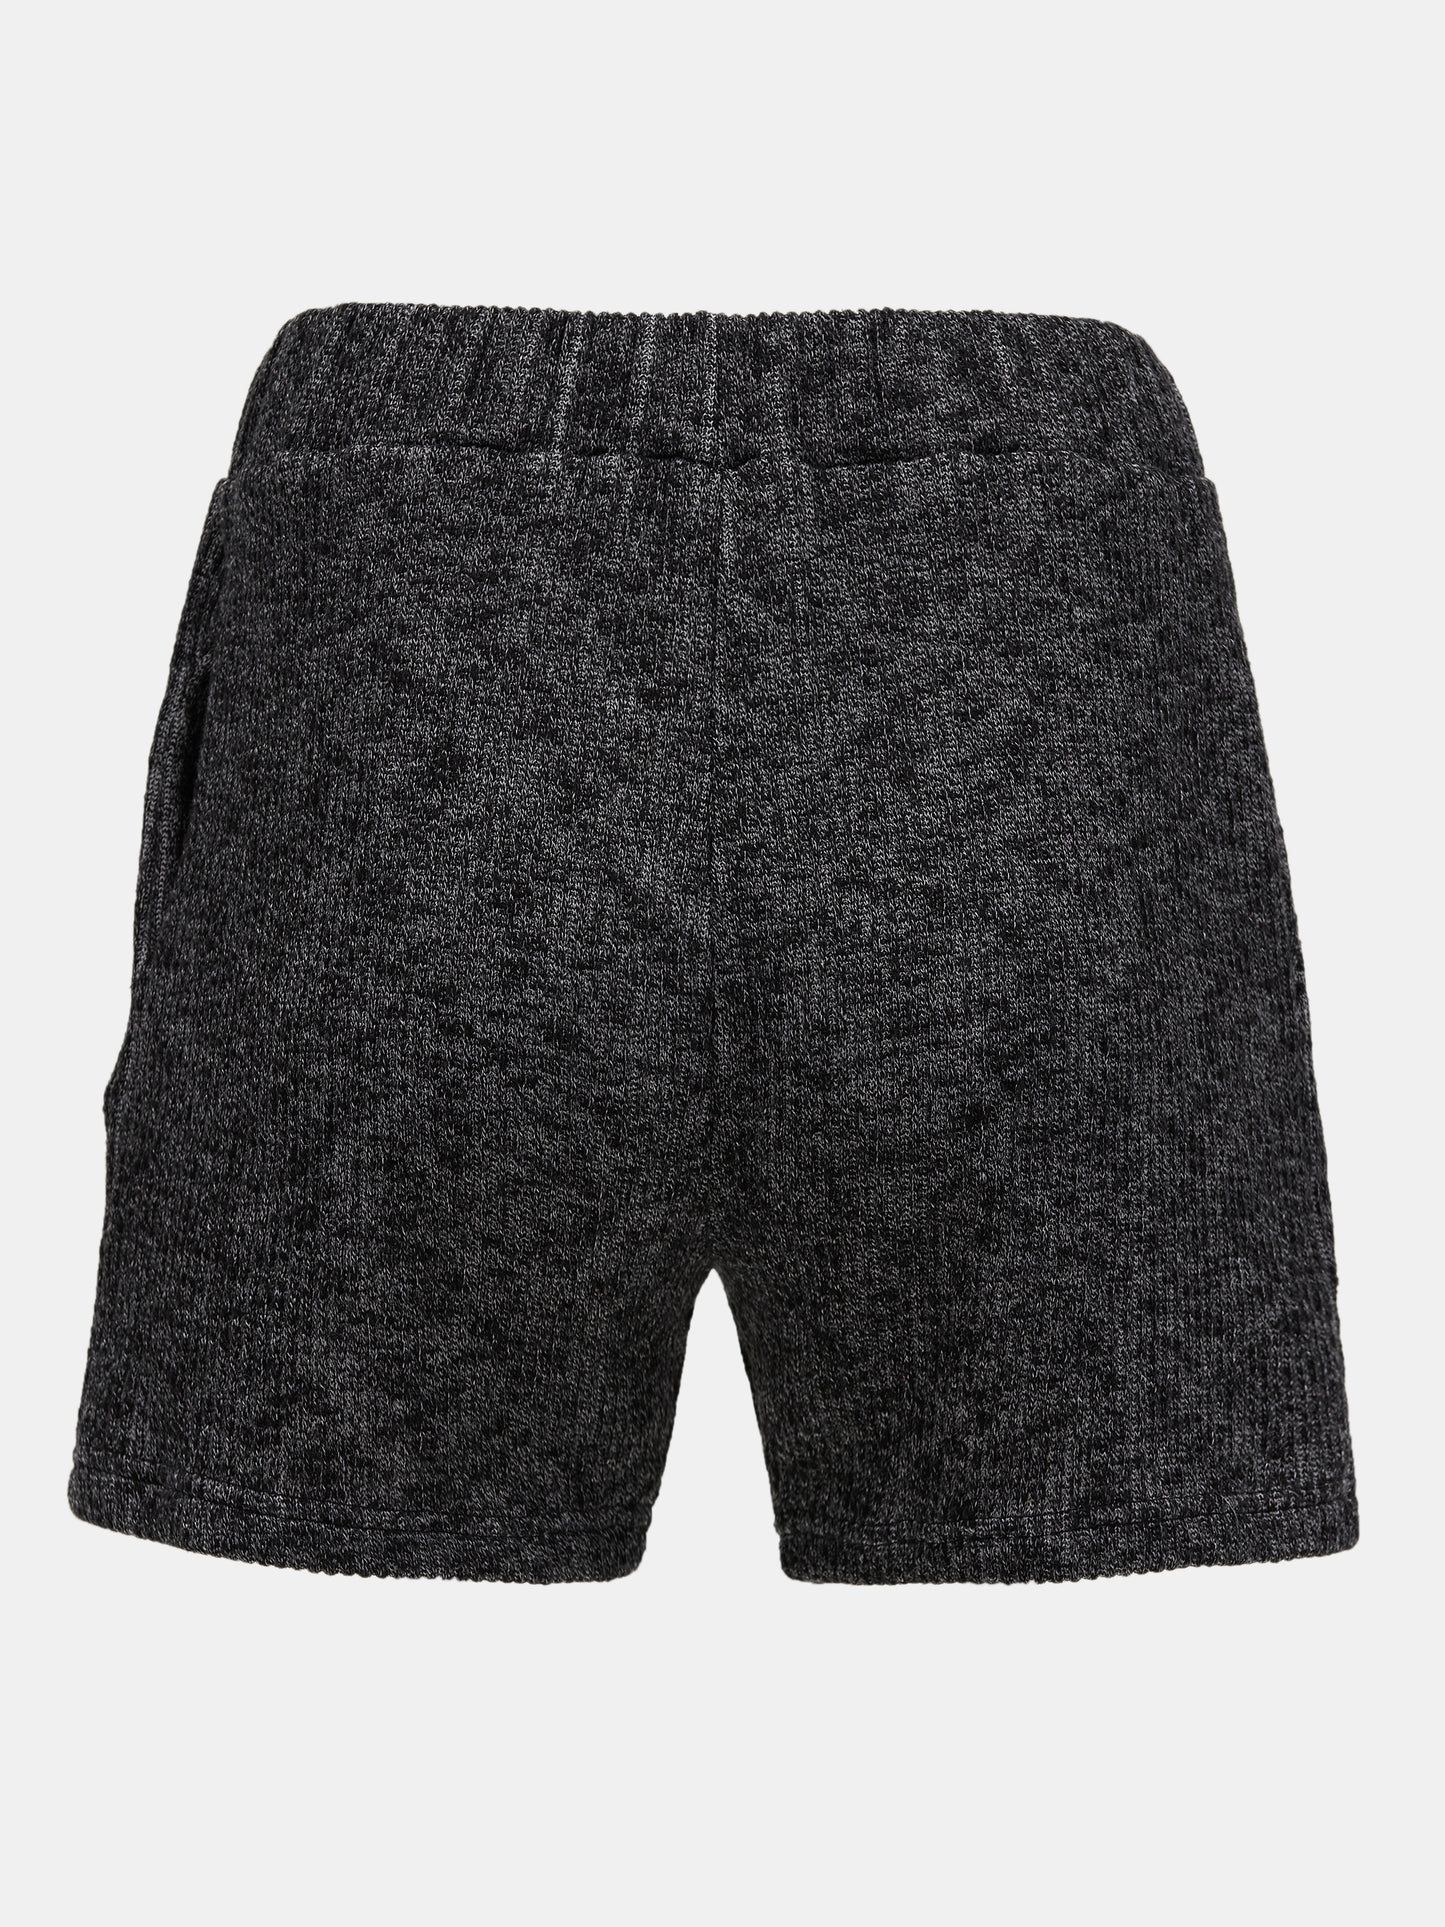 Rib Knit Shorts & Leg Warmers Set, Black Melange